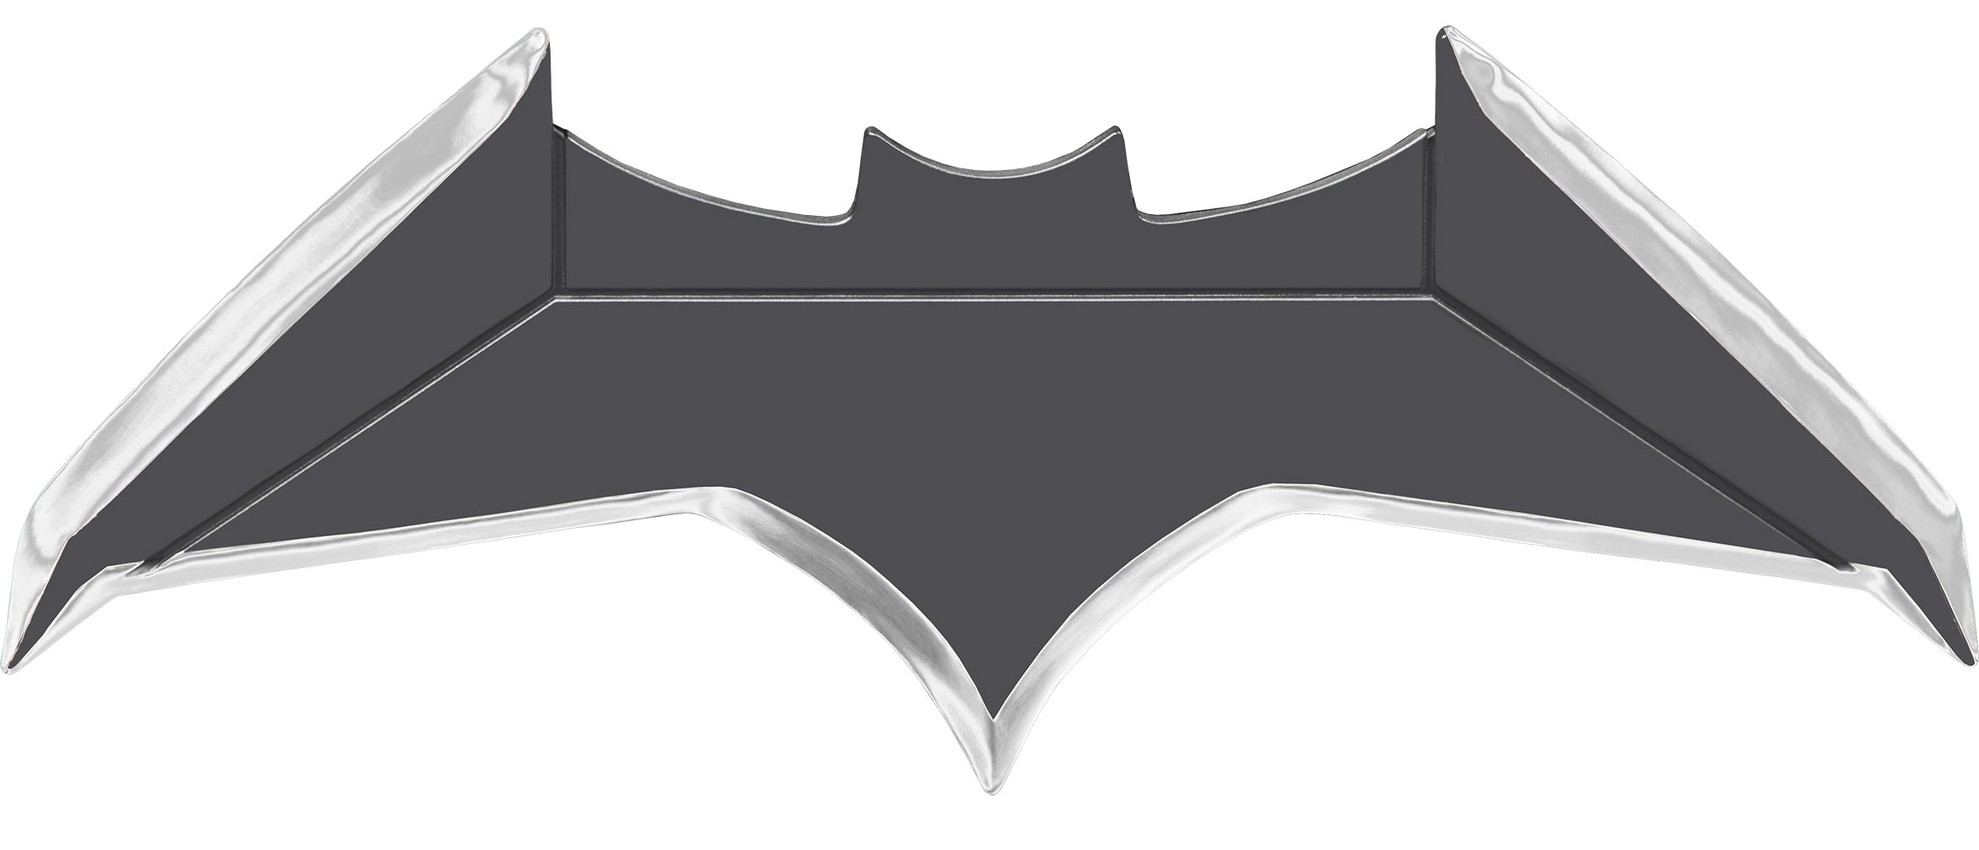 Justice League Metal Batarang- Prototype Shown View 3